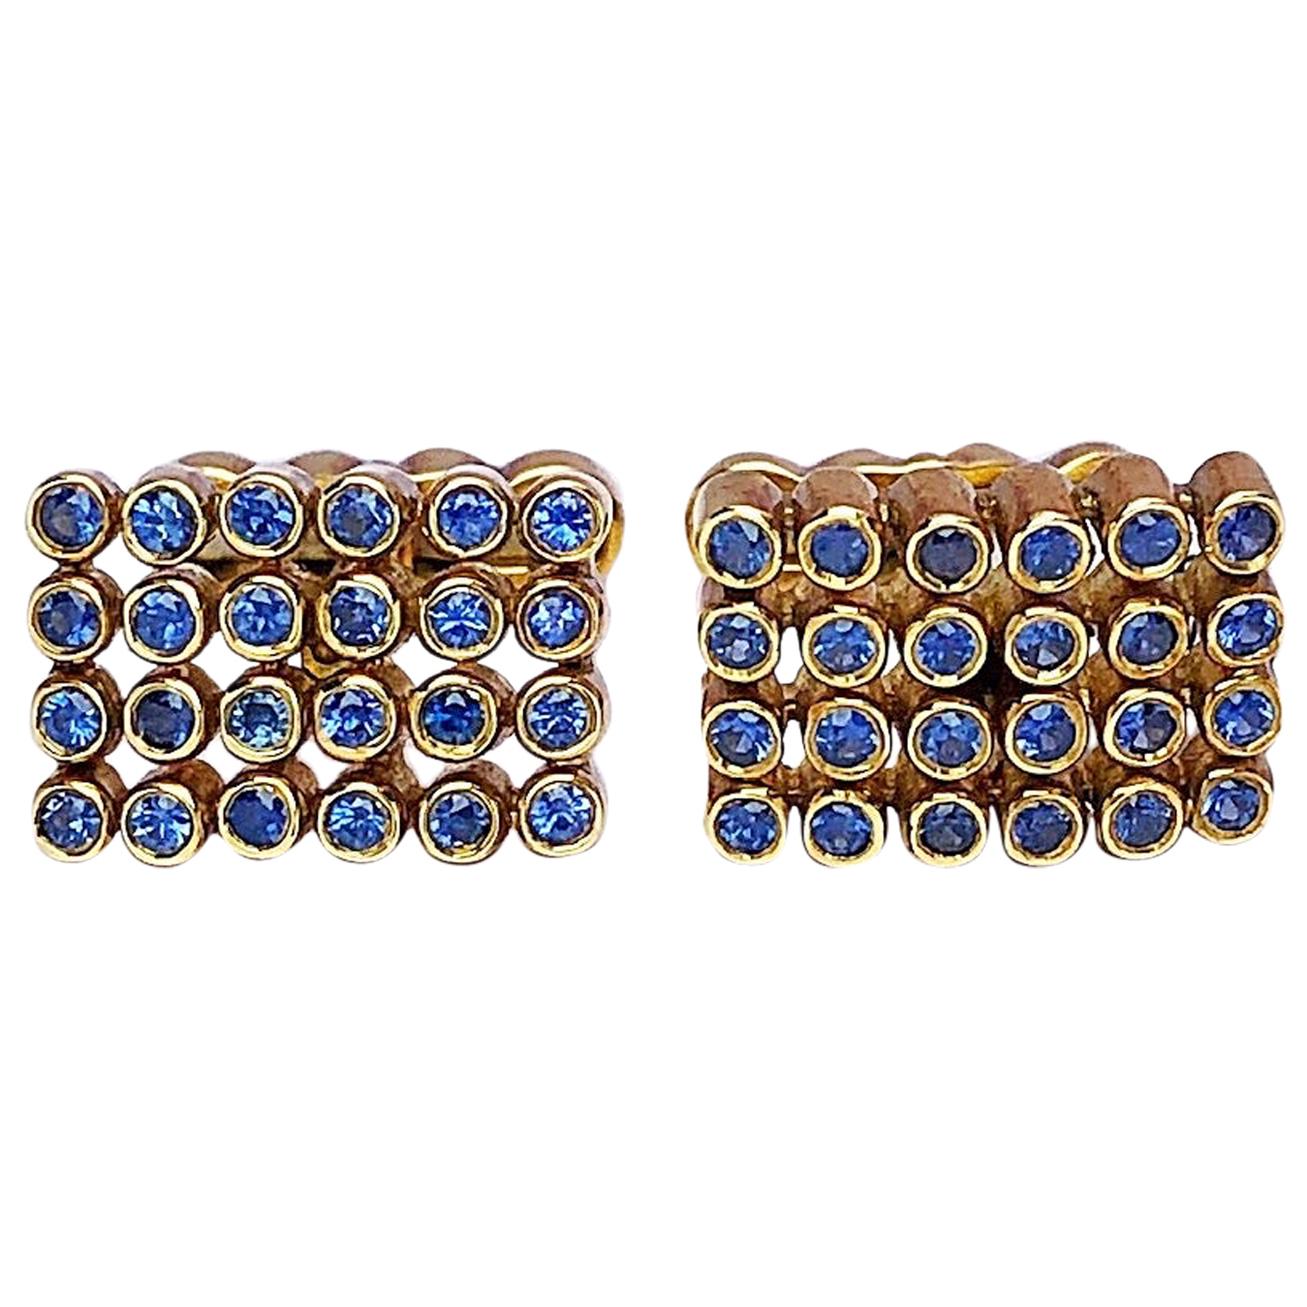 George Gero 18 Karat Gold Rectangular Cufflinks with 1.17 Carat Blue Sapphires